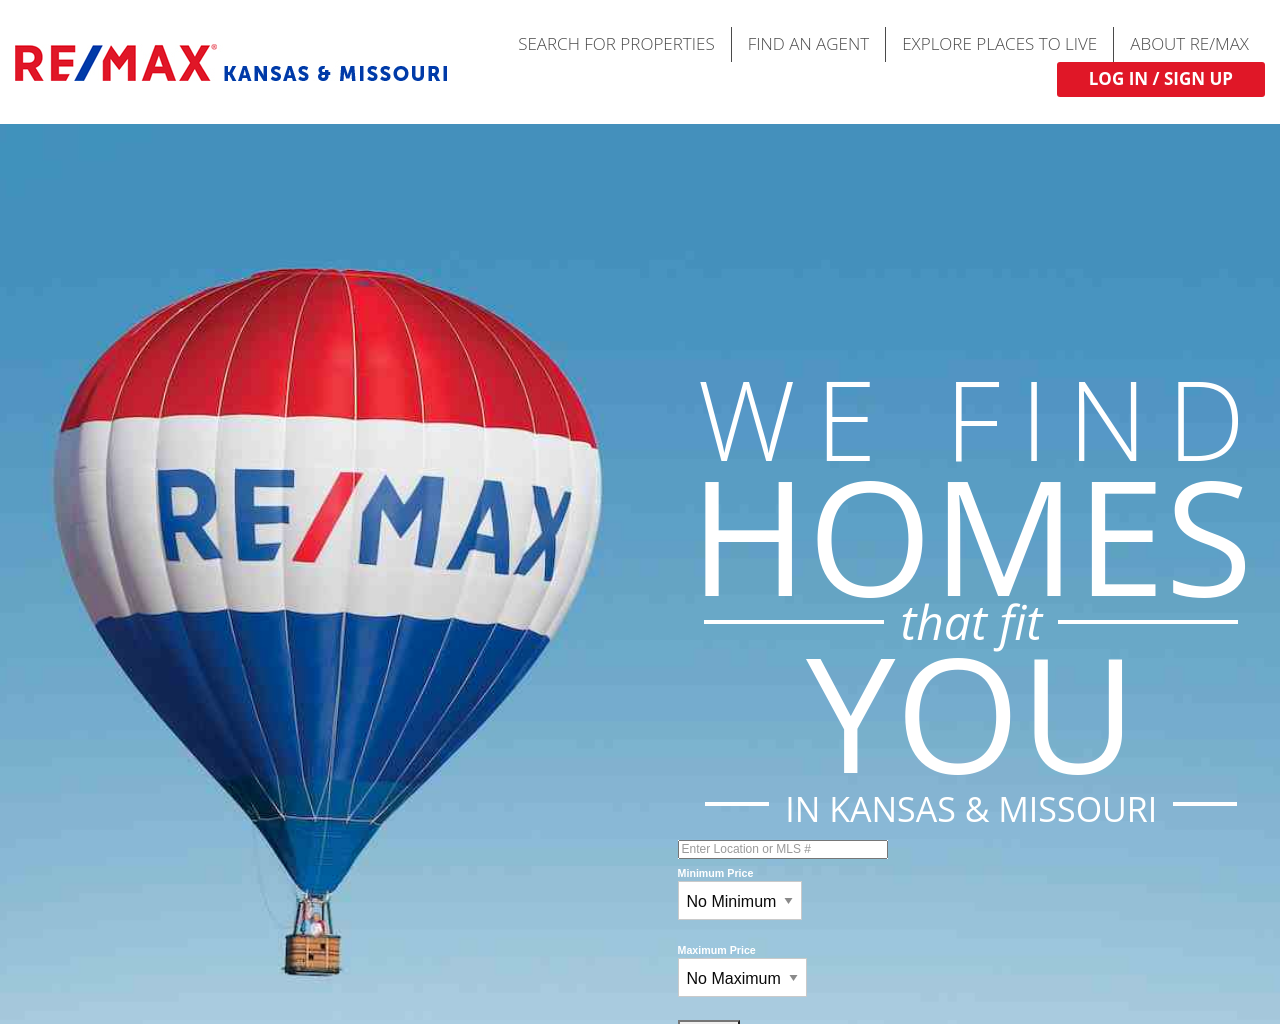 remax-midstates.com